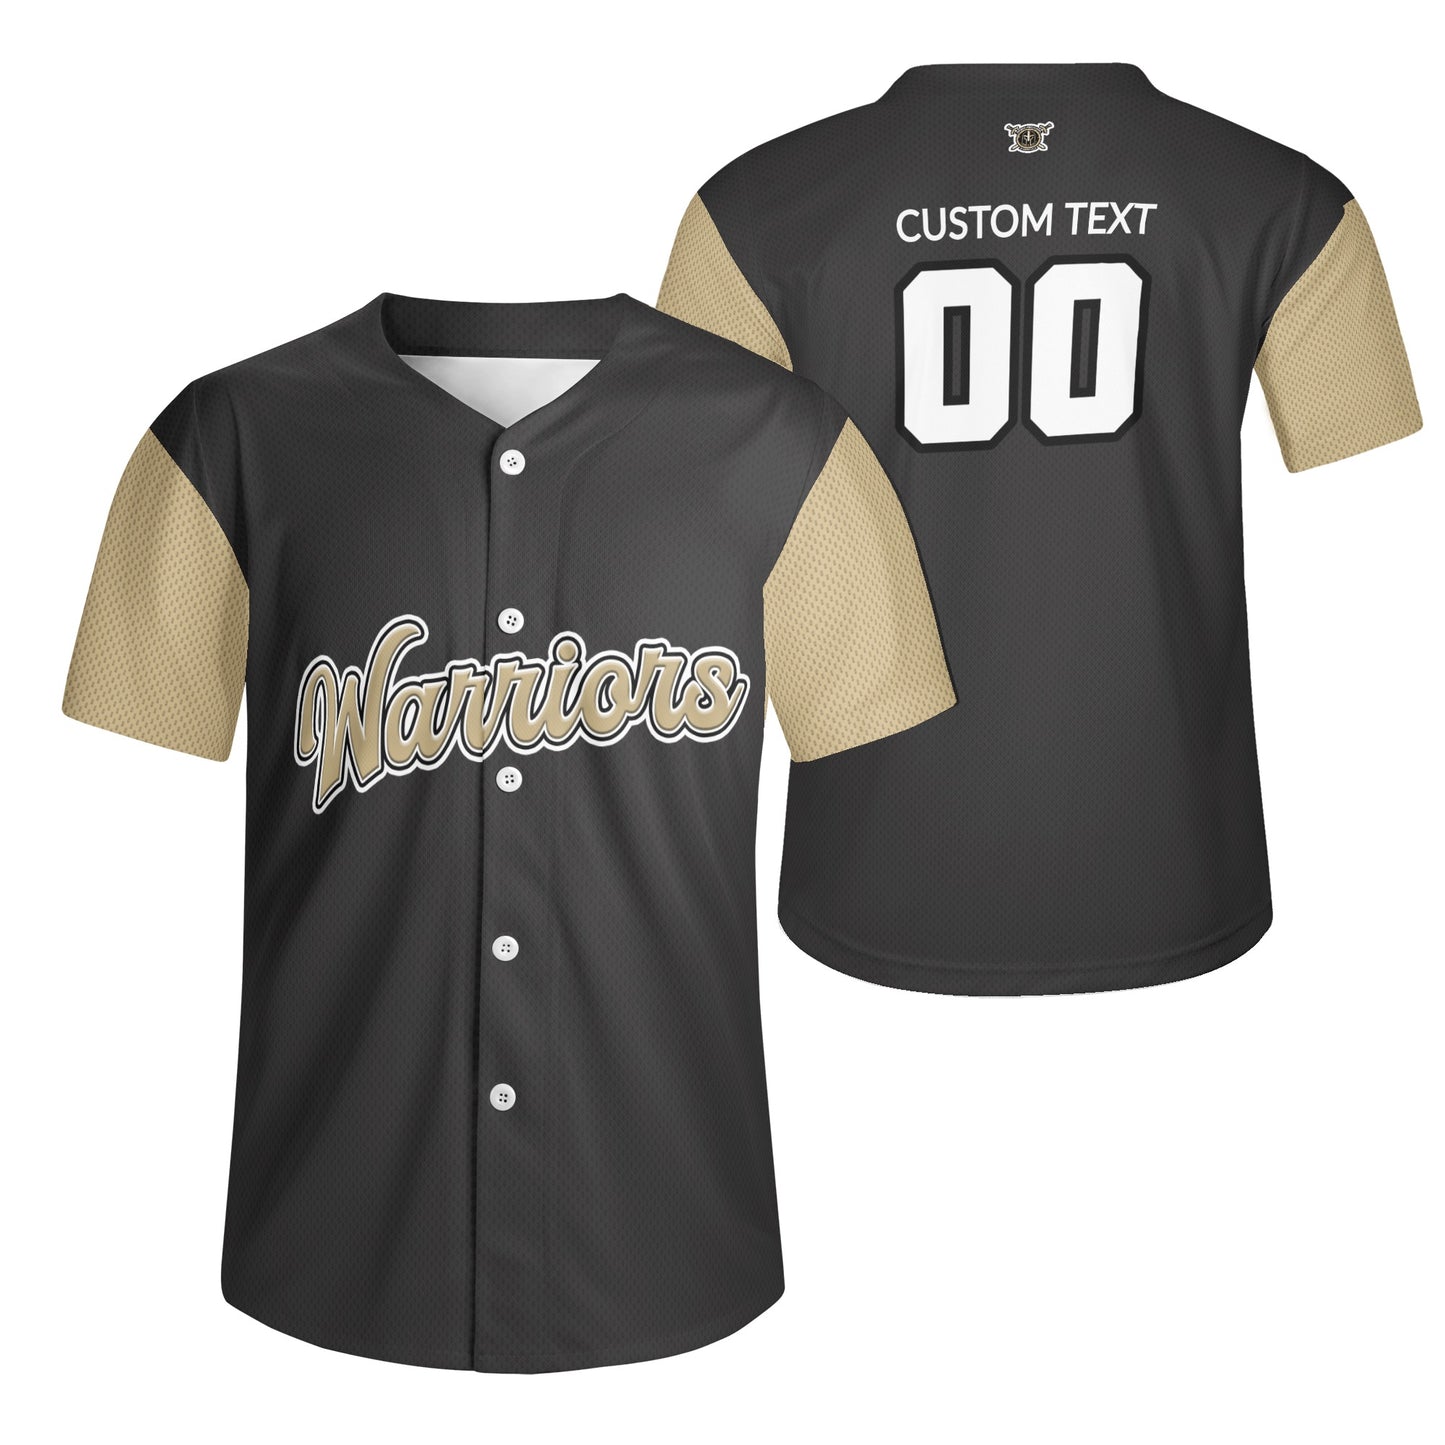 JHS - Black/Gold Baseball Jersey